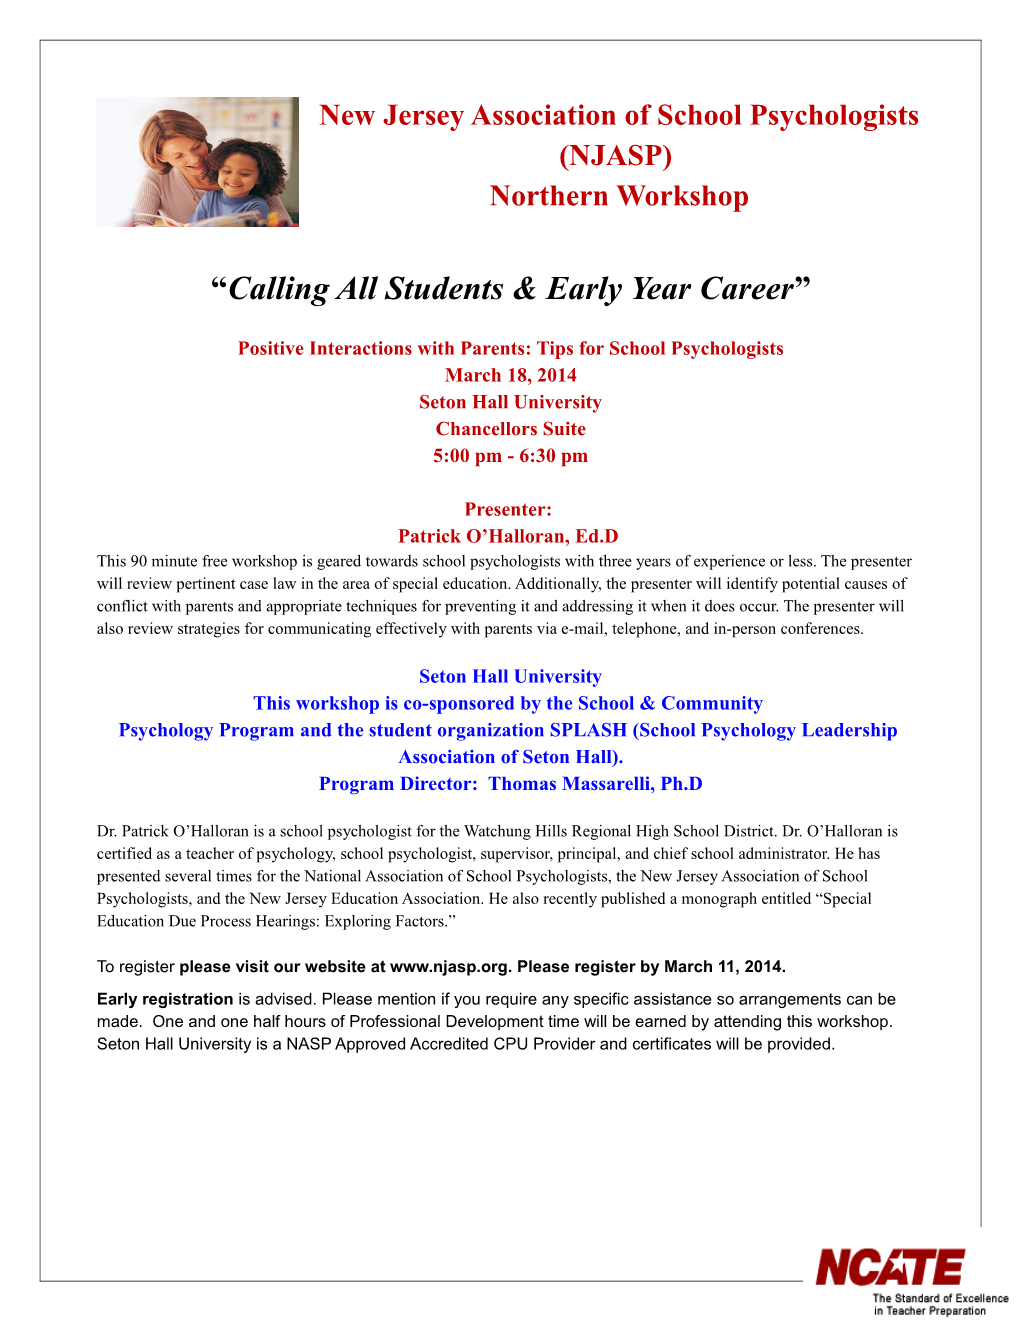 New Jersey Association of School Psychologists (NJASP) Northern Workshop